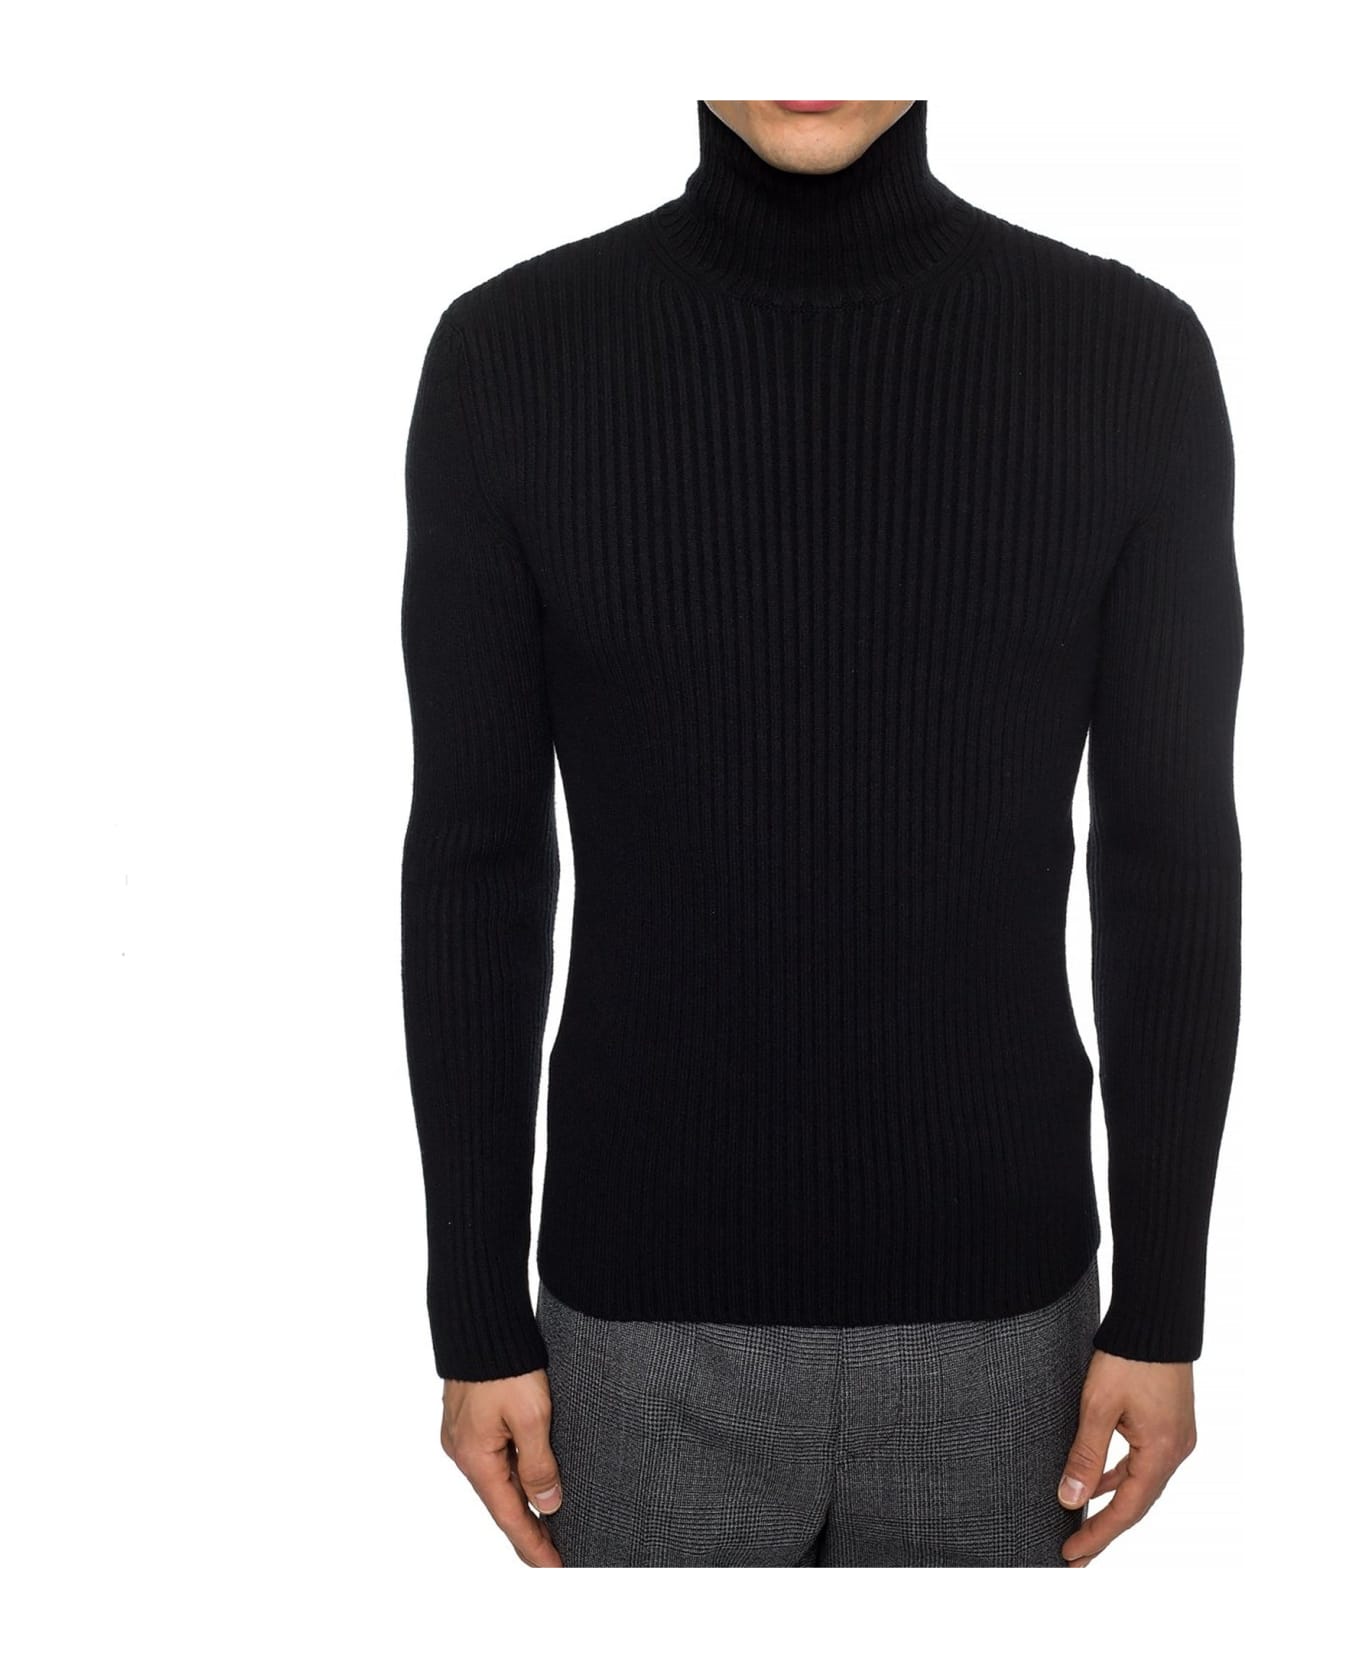 Balenciaga Cashmere Blend Rib Knit Turtleneck - Black